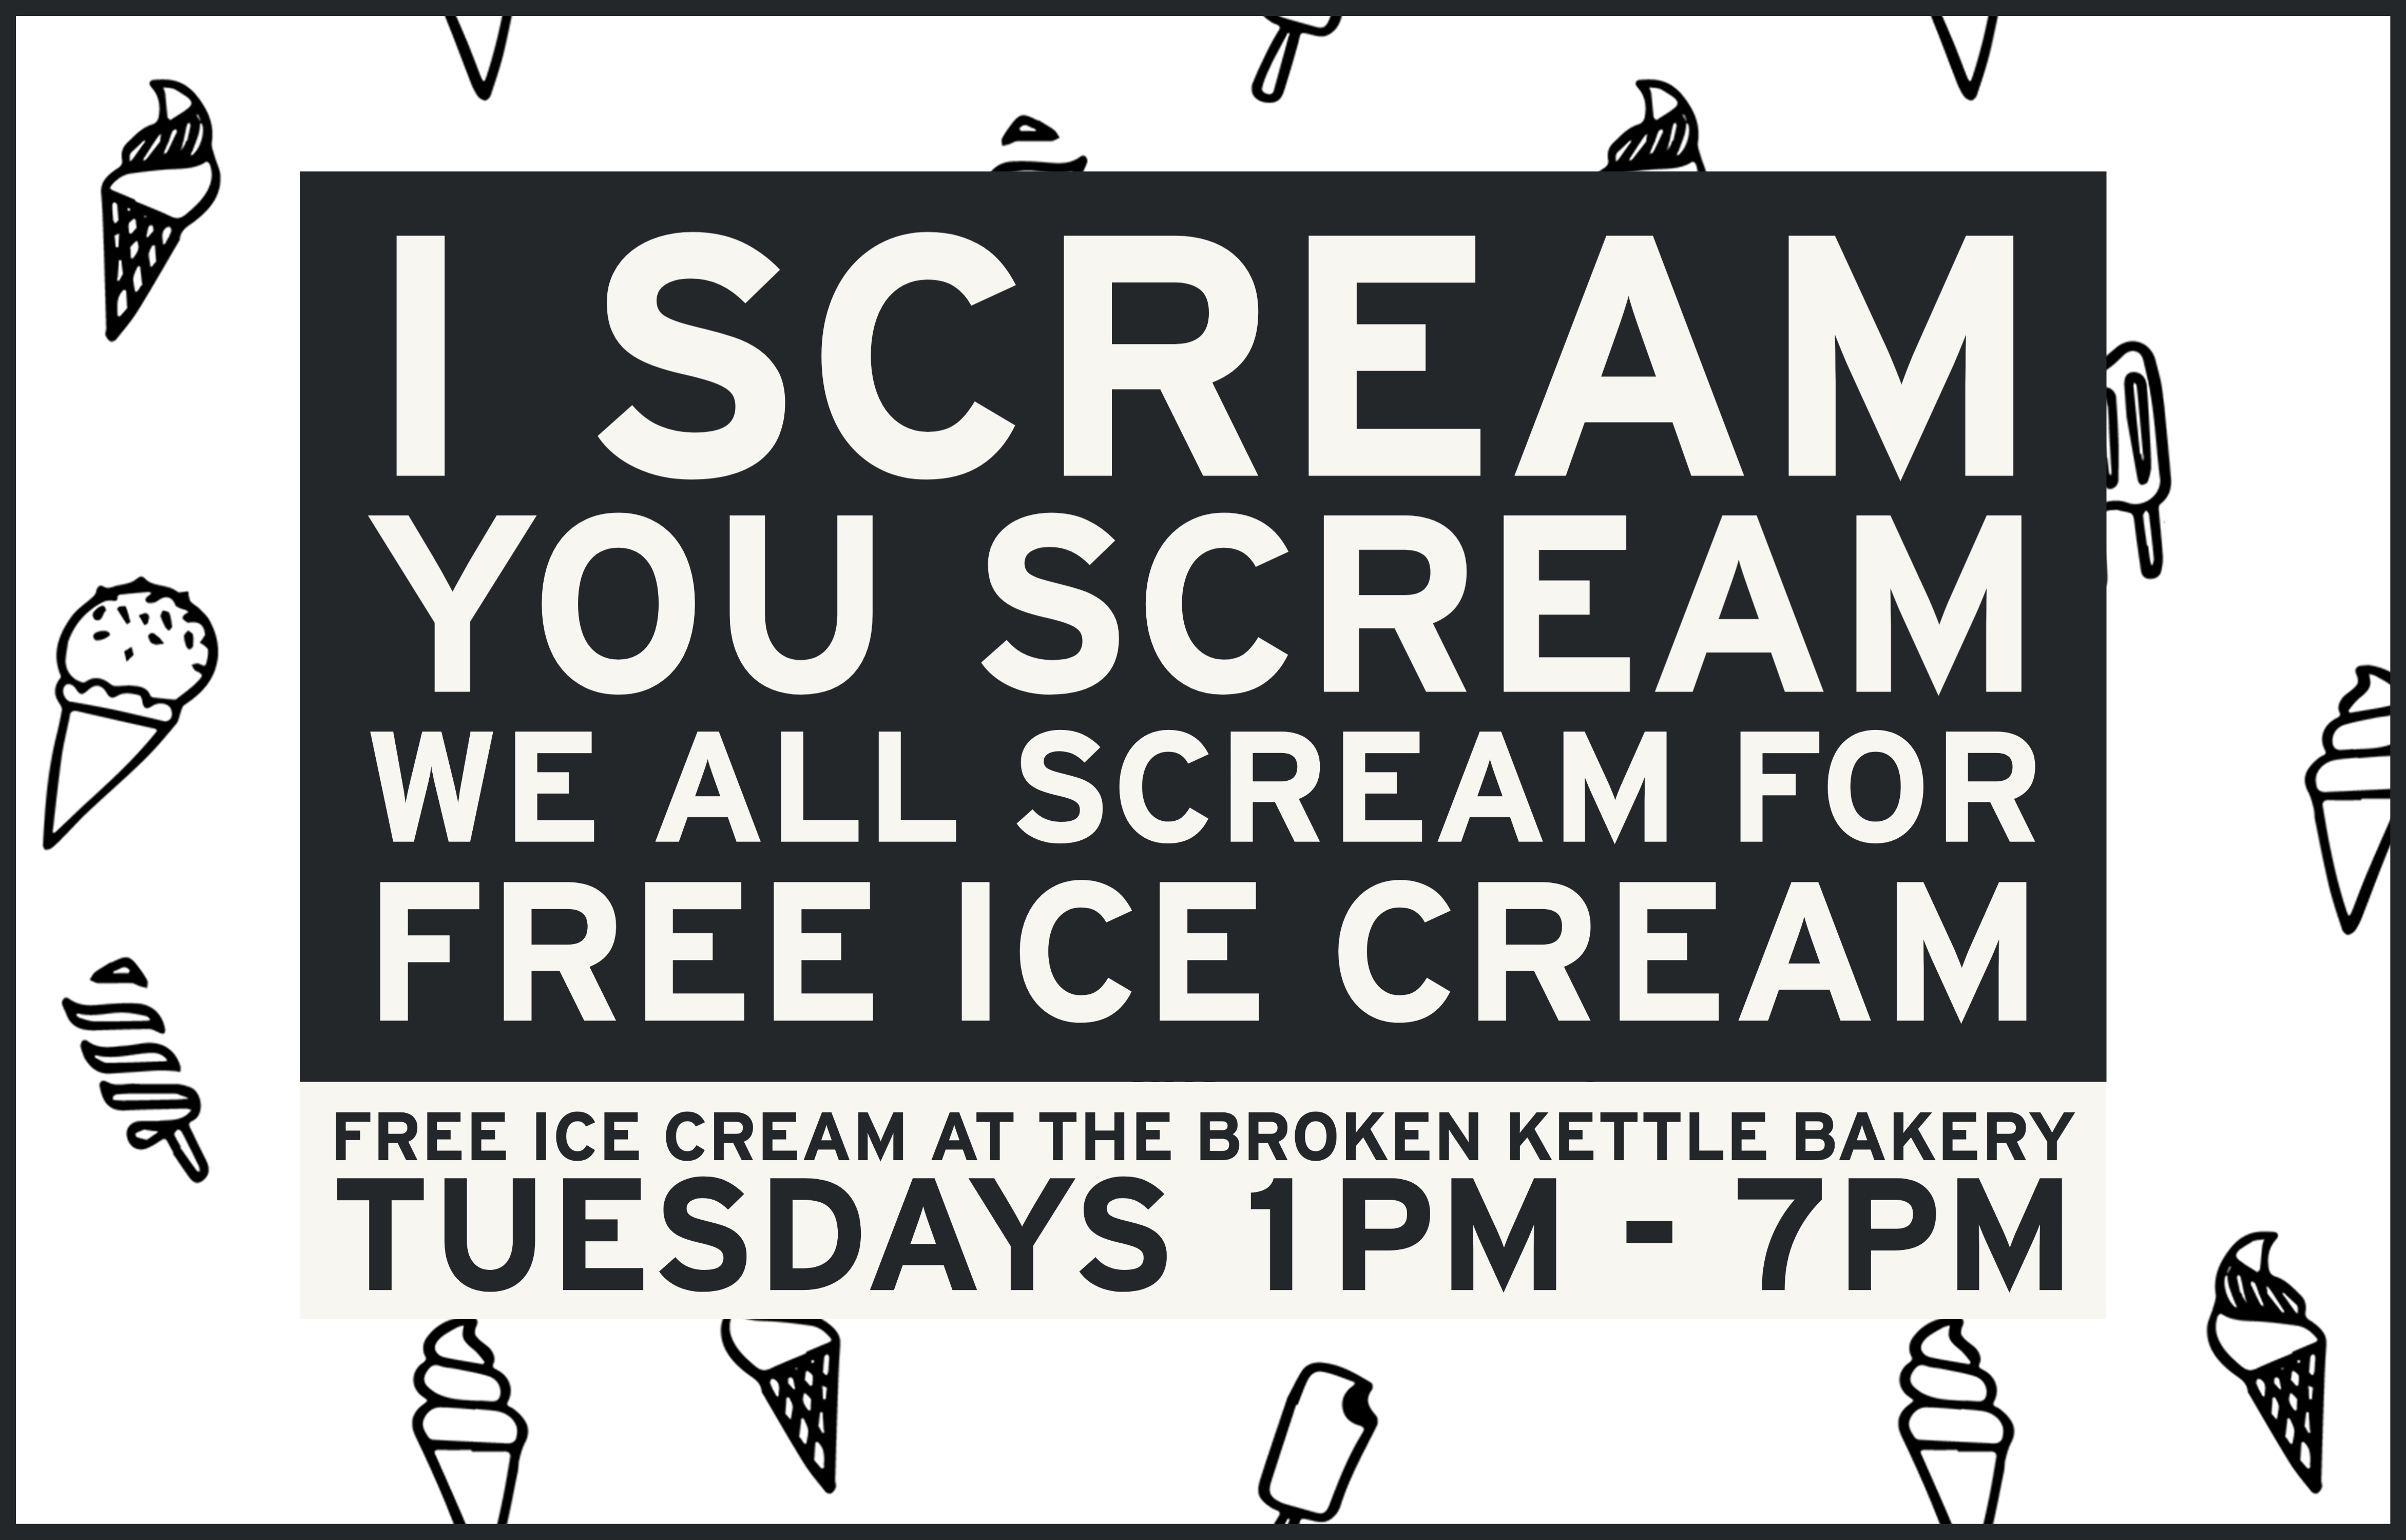 Free Ice Cream Tuesday